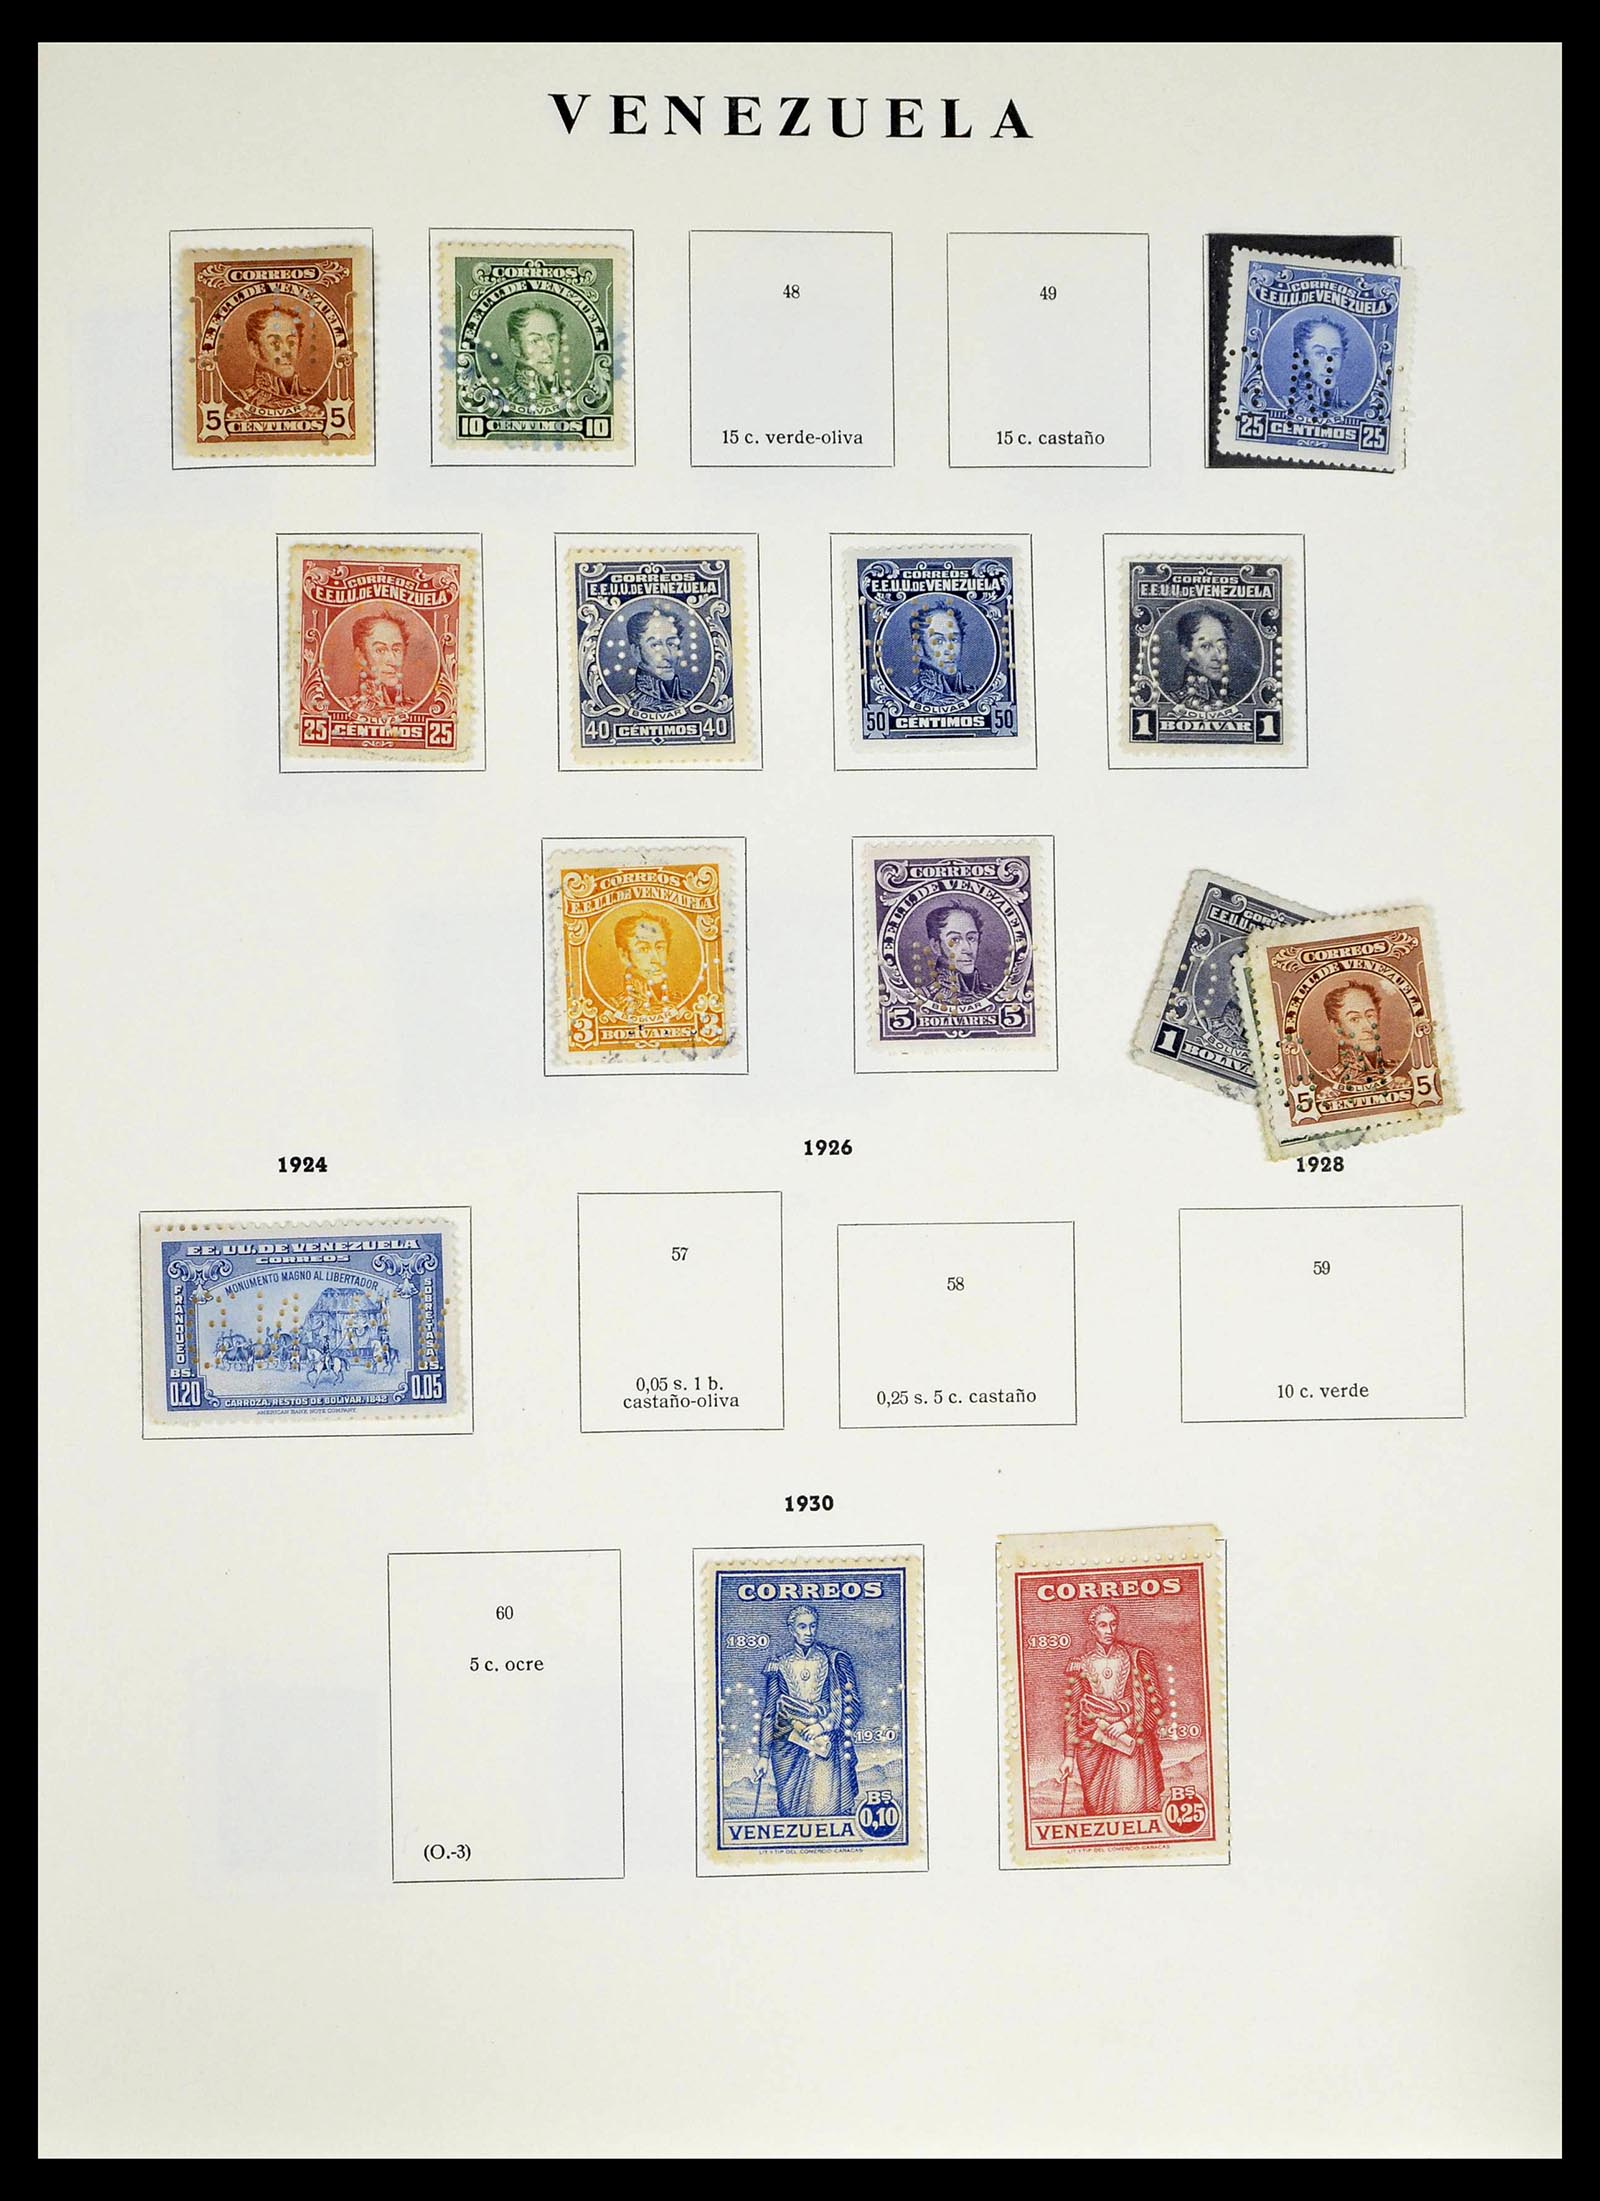 39223 0198 - Stamp collection 39223 Venezuela 1859-1984.